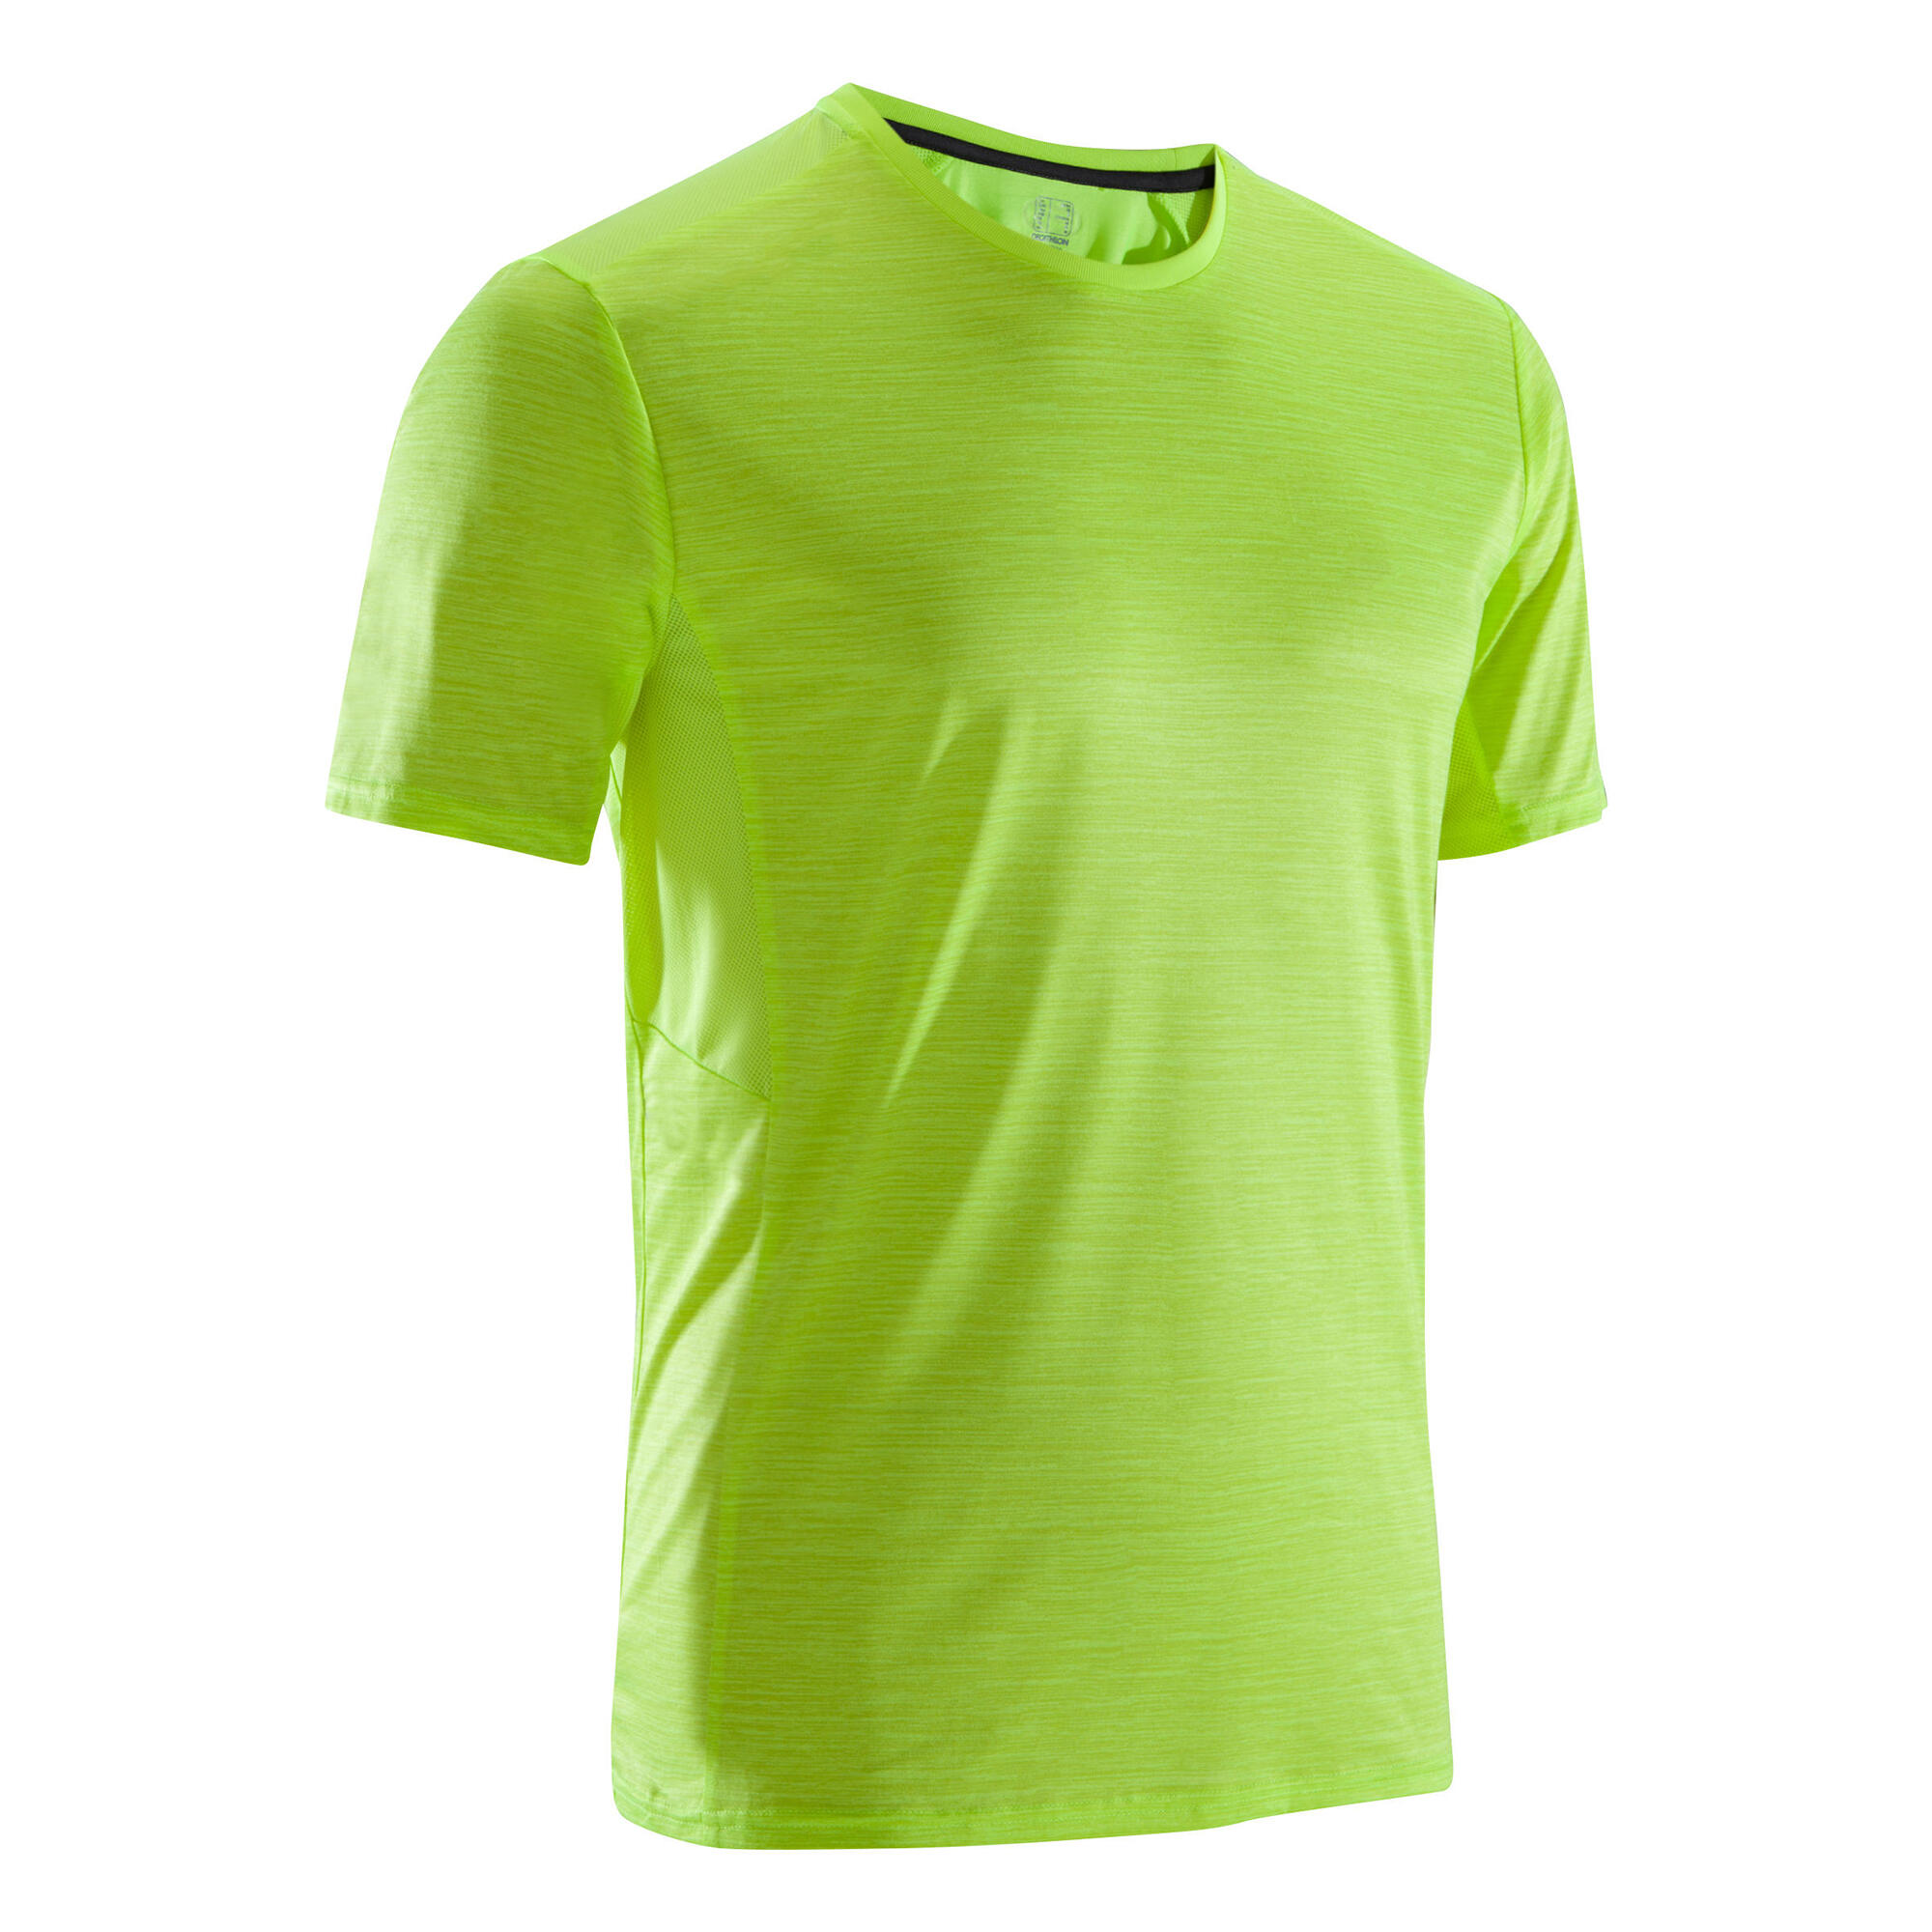 KALENJI Dry+ men's breathable running T-shirt - yellow